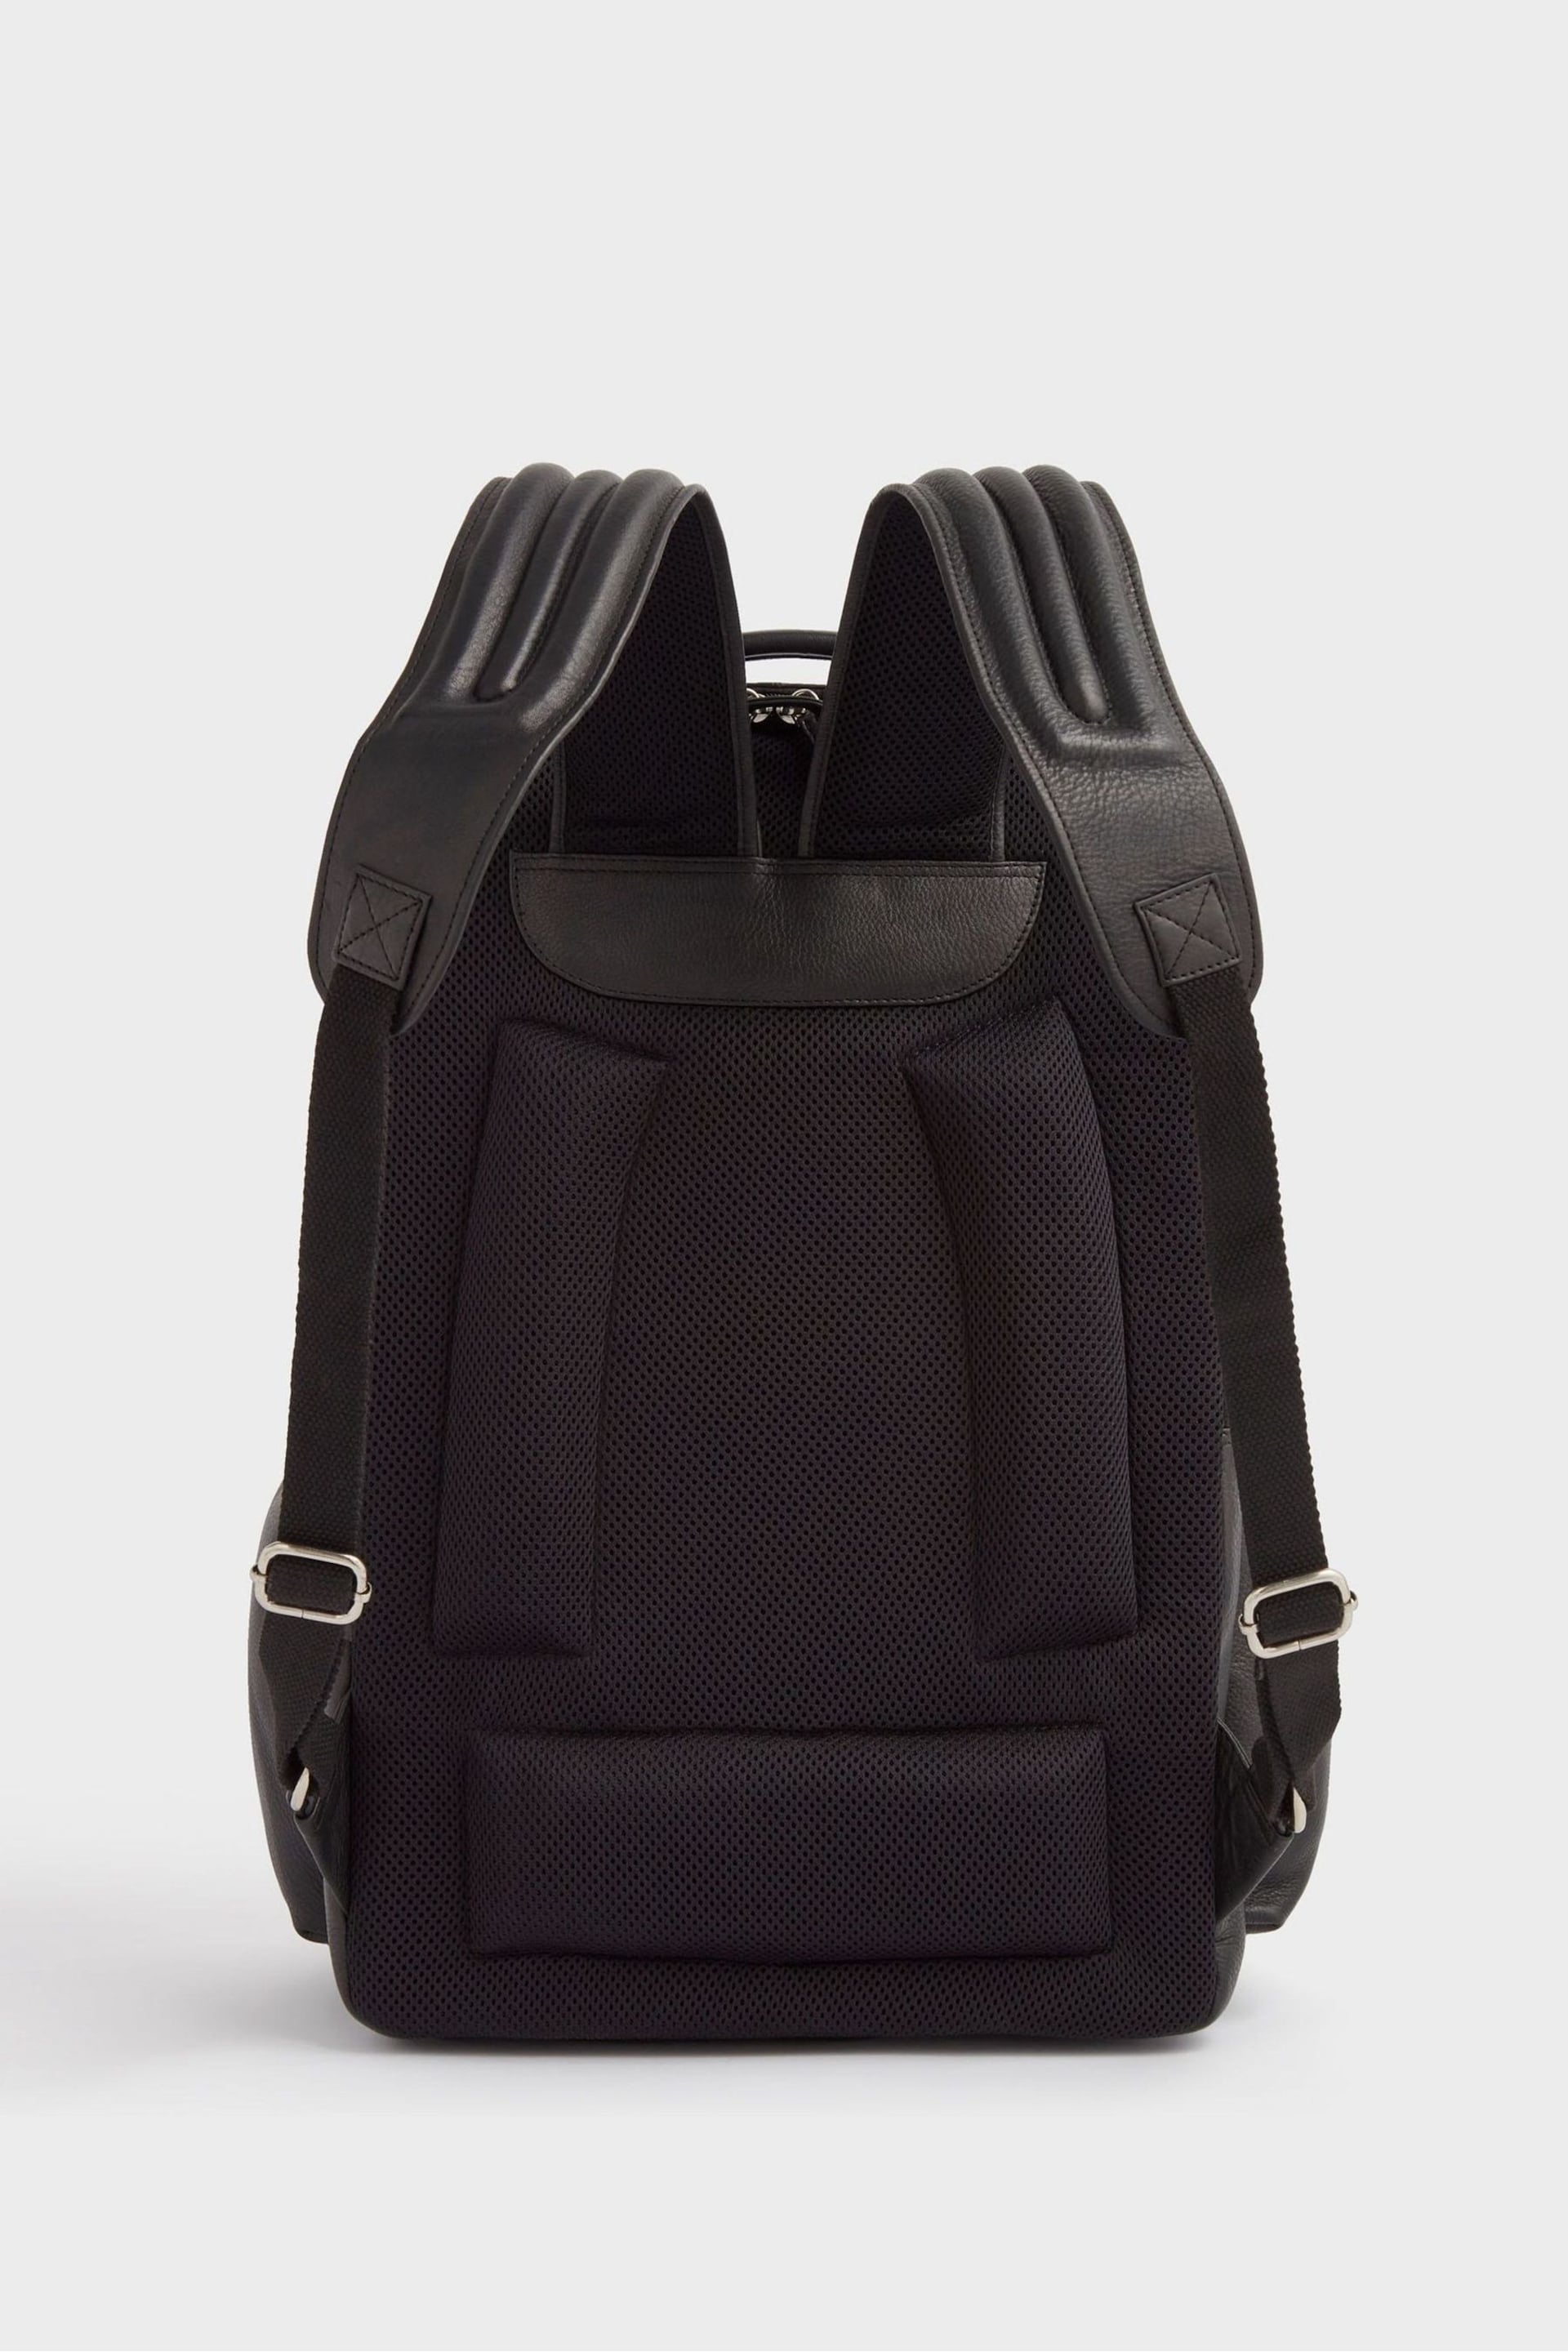 OSPREY LONDON The Lockton Black Leather Backpack - Image 2 of 4